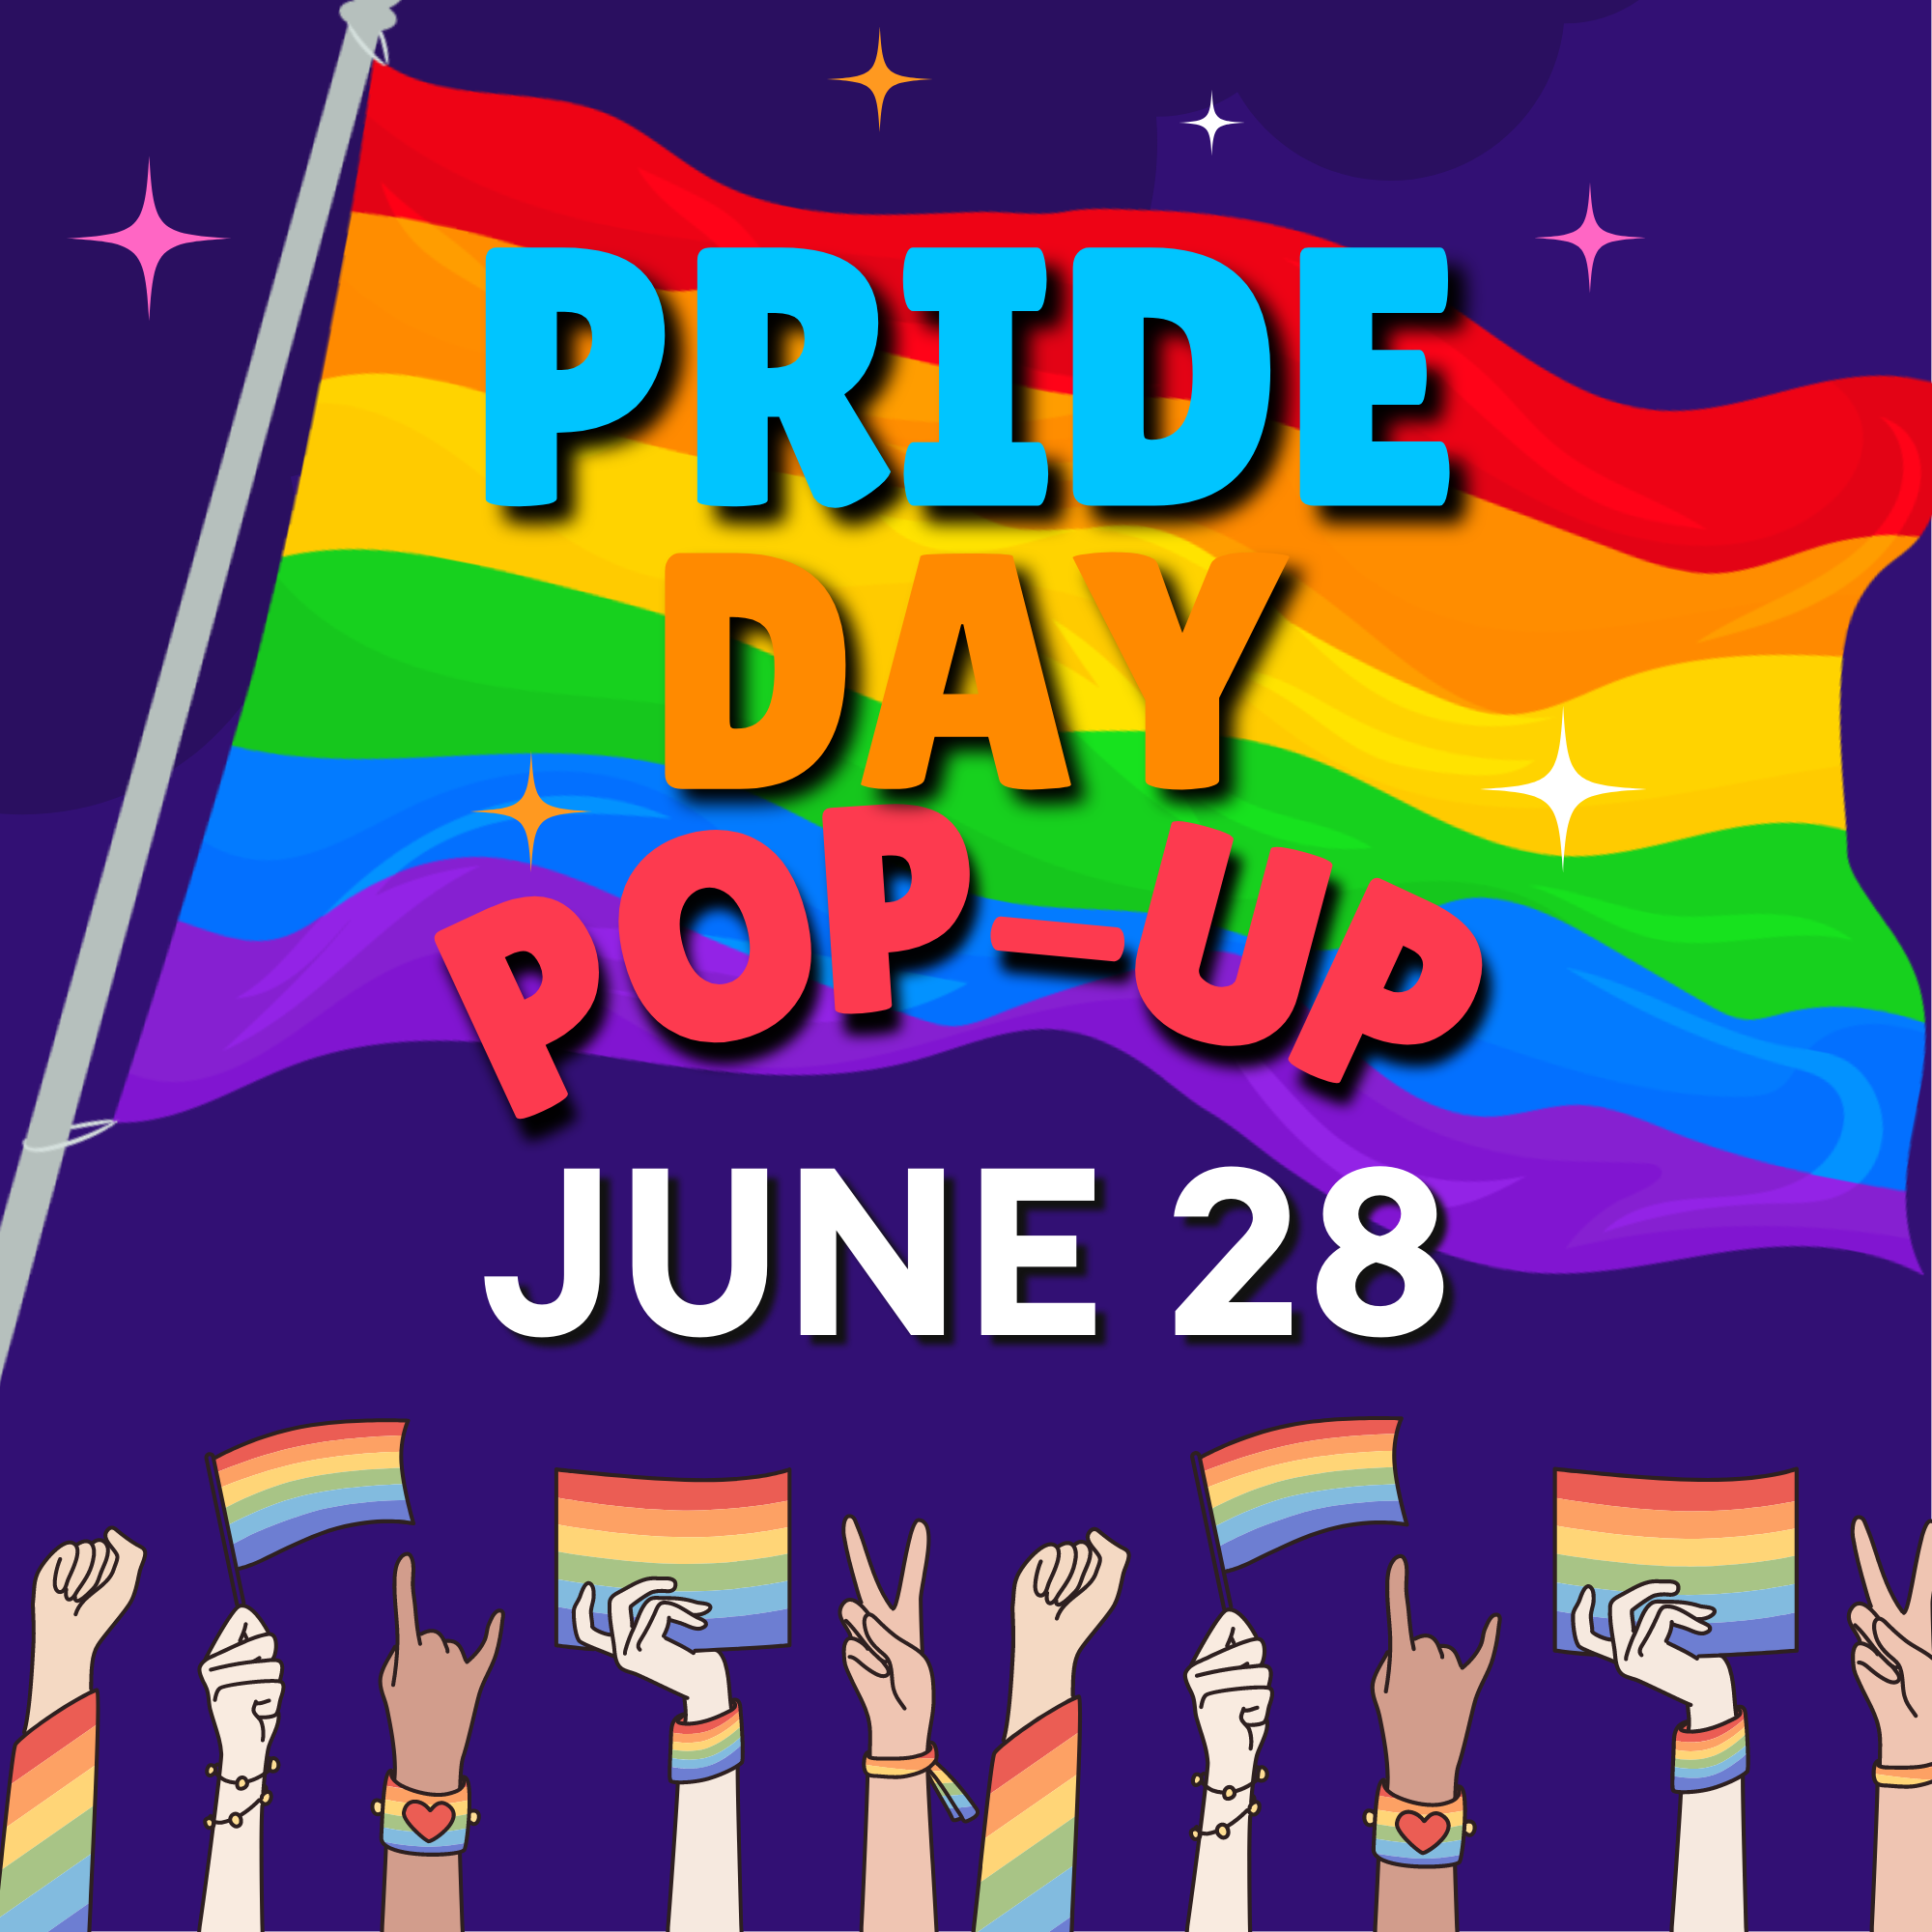 Pride Day Pop-Up